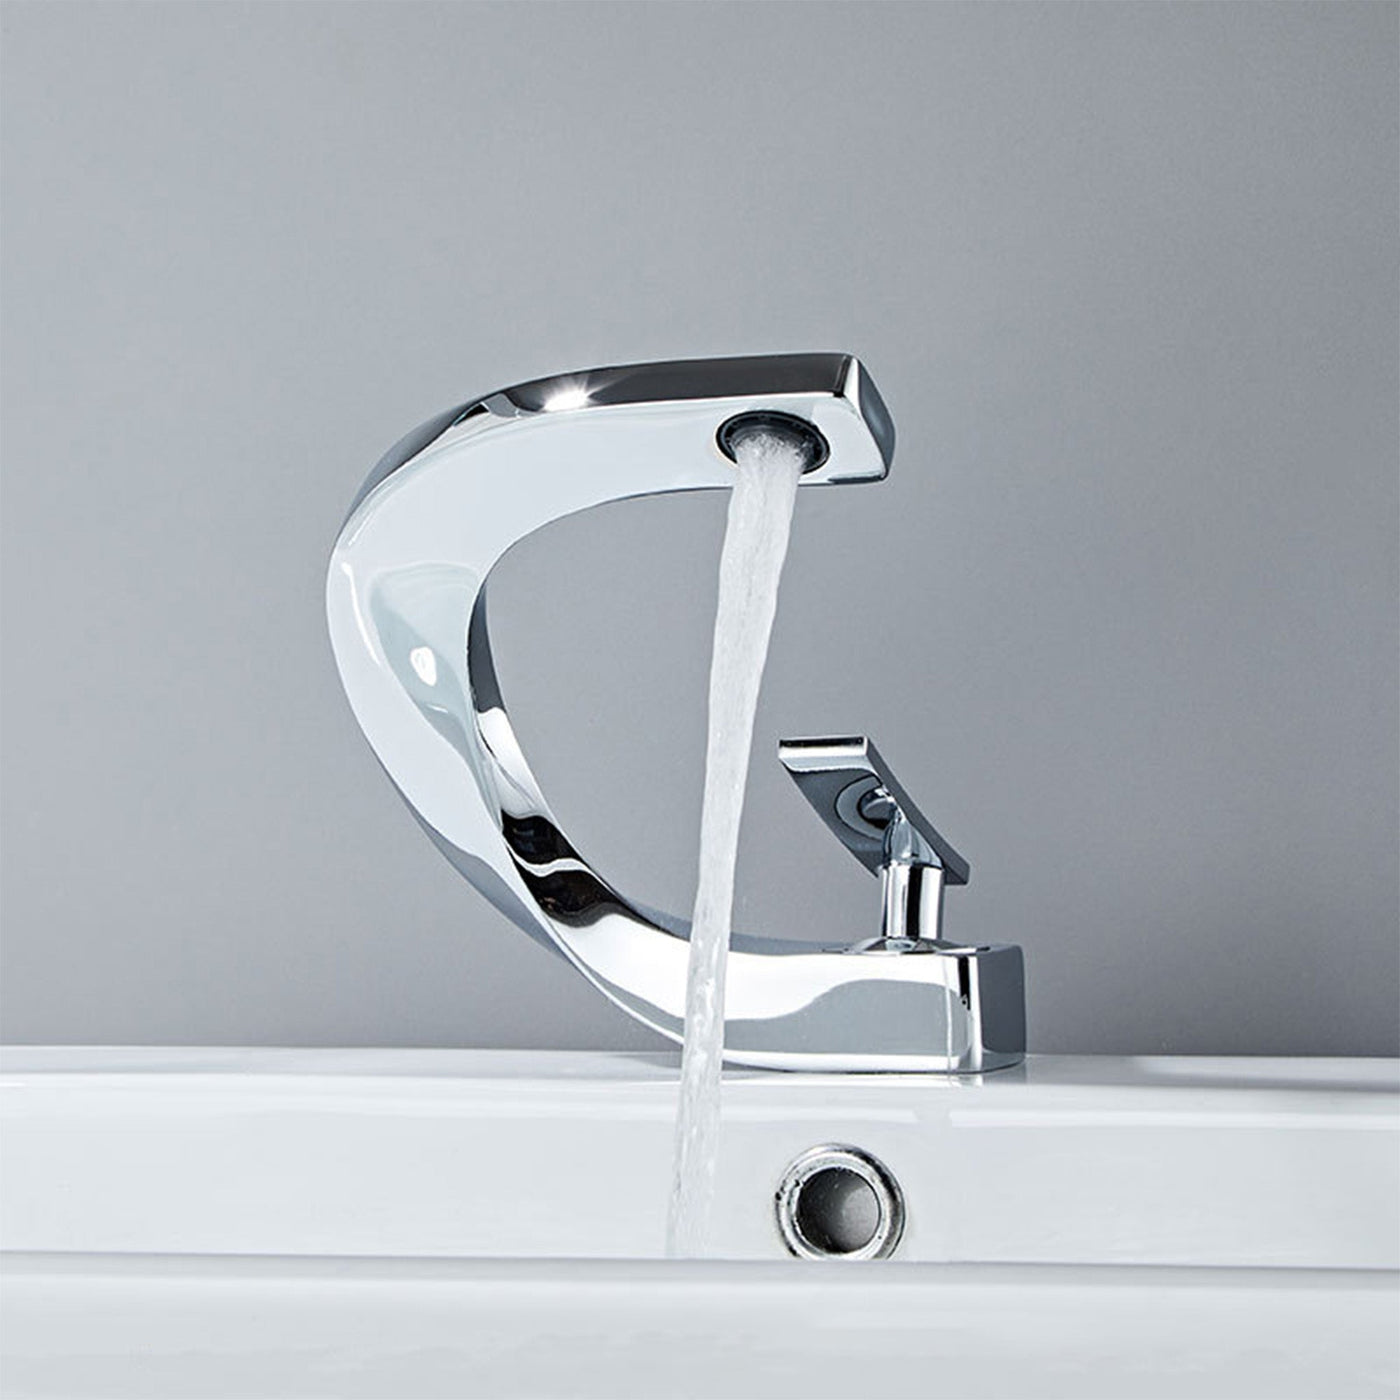 Faucet/ sink tap/ Kitchen sink tap / bathroom tap/ kitchen tap/ kitchen faucet/ bathroom Faucet/ Metal Faucet/ Faucet & Accessories/ Metal Taps